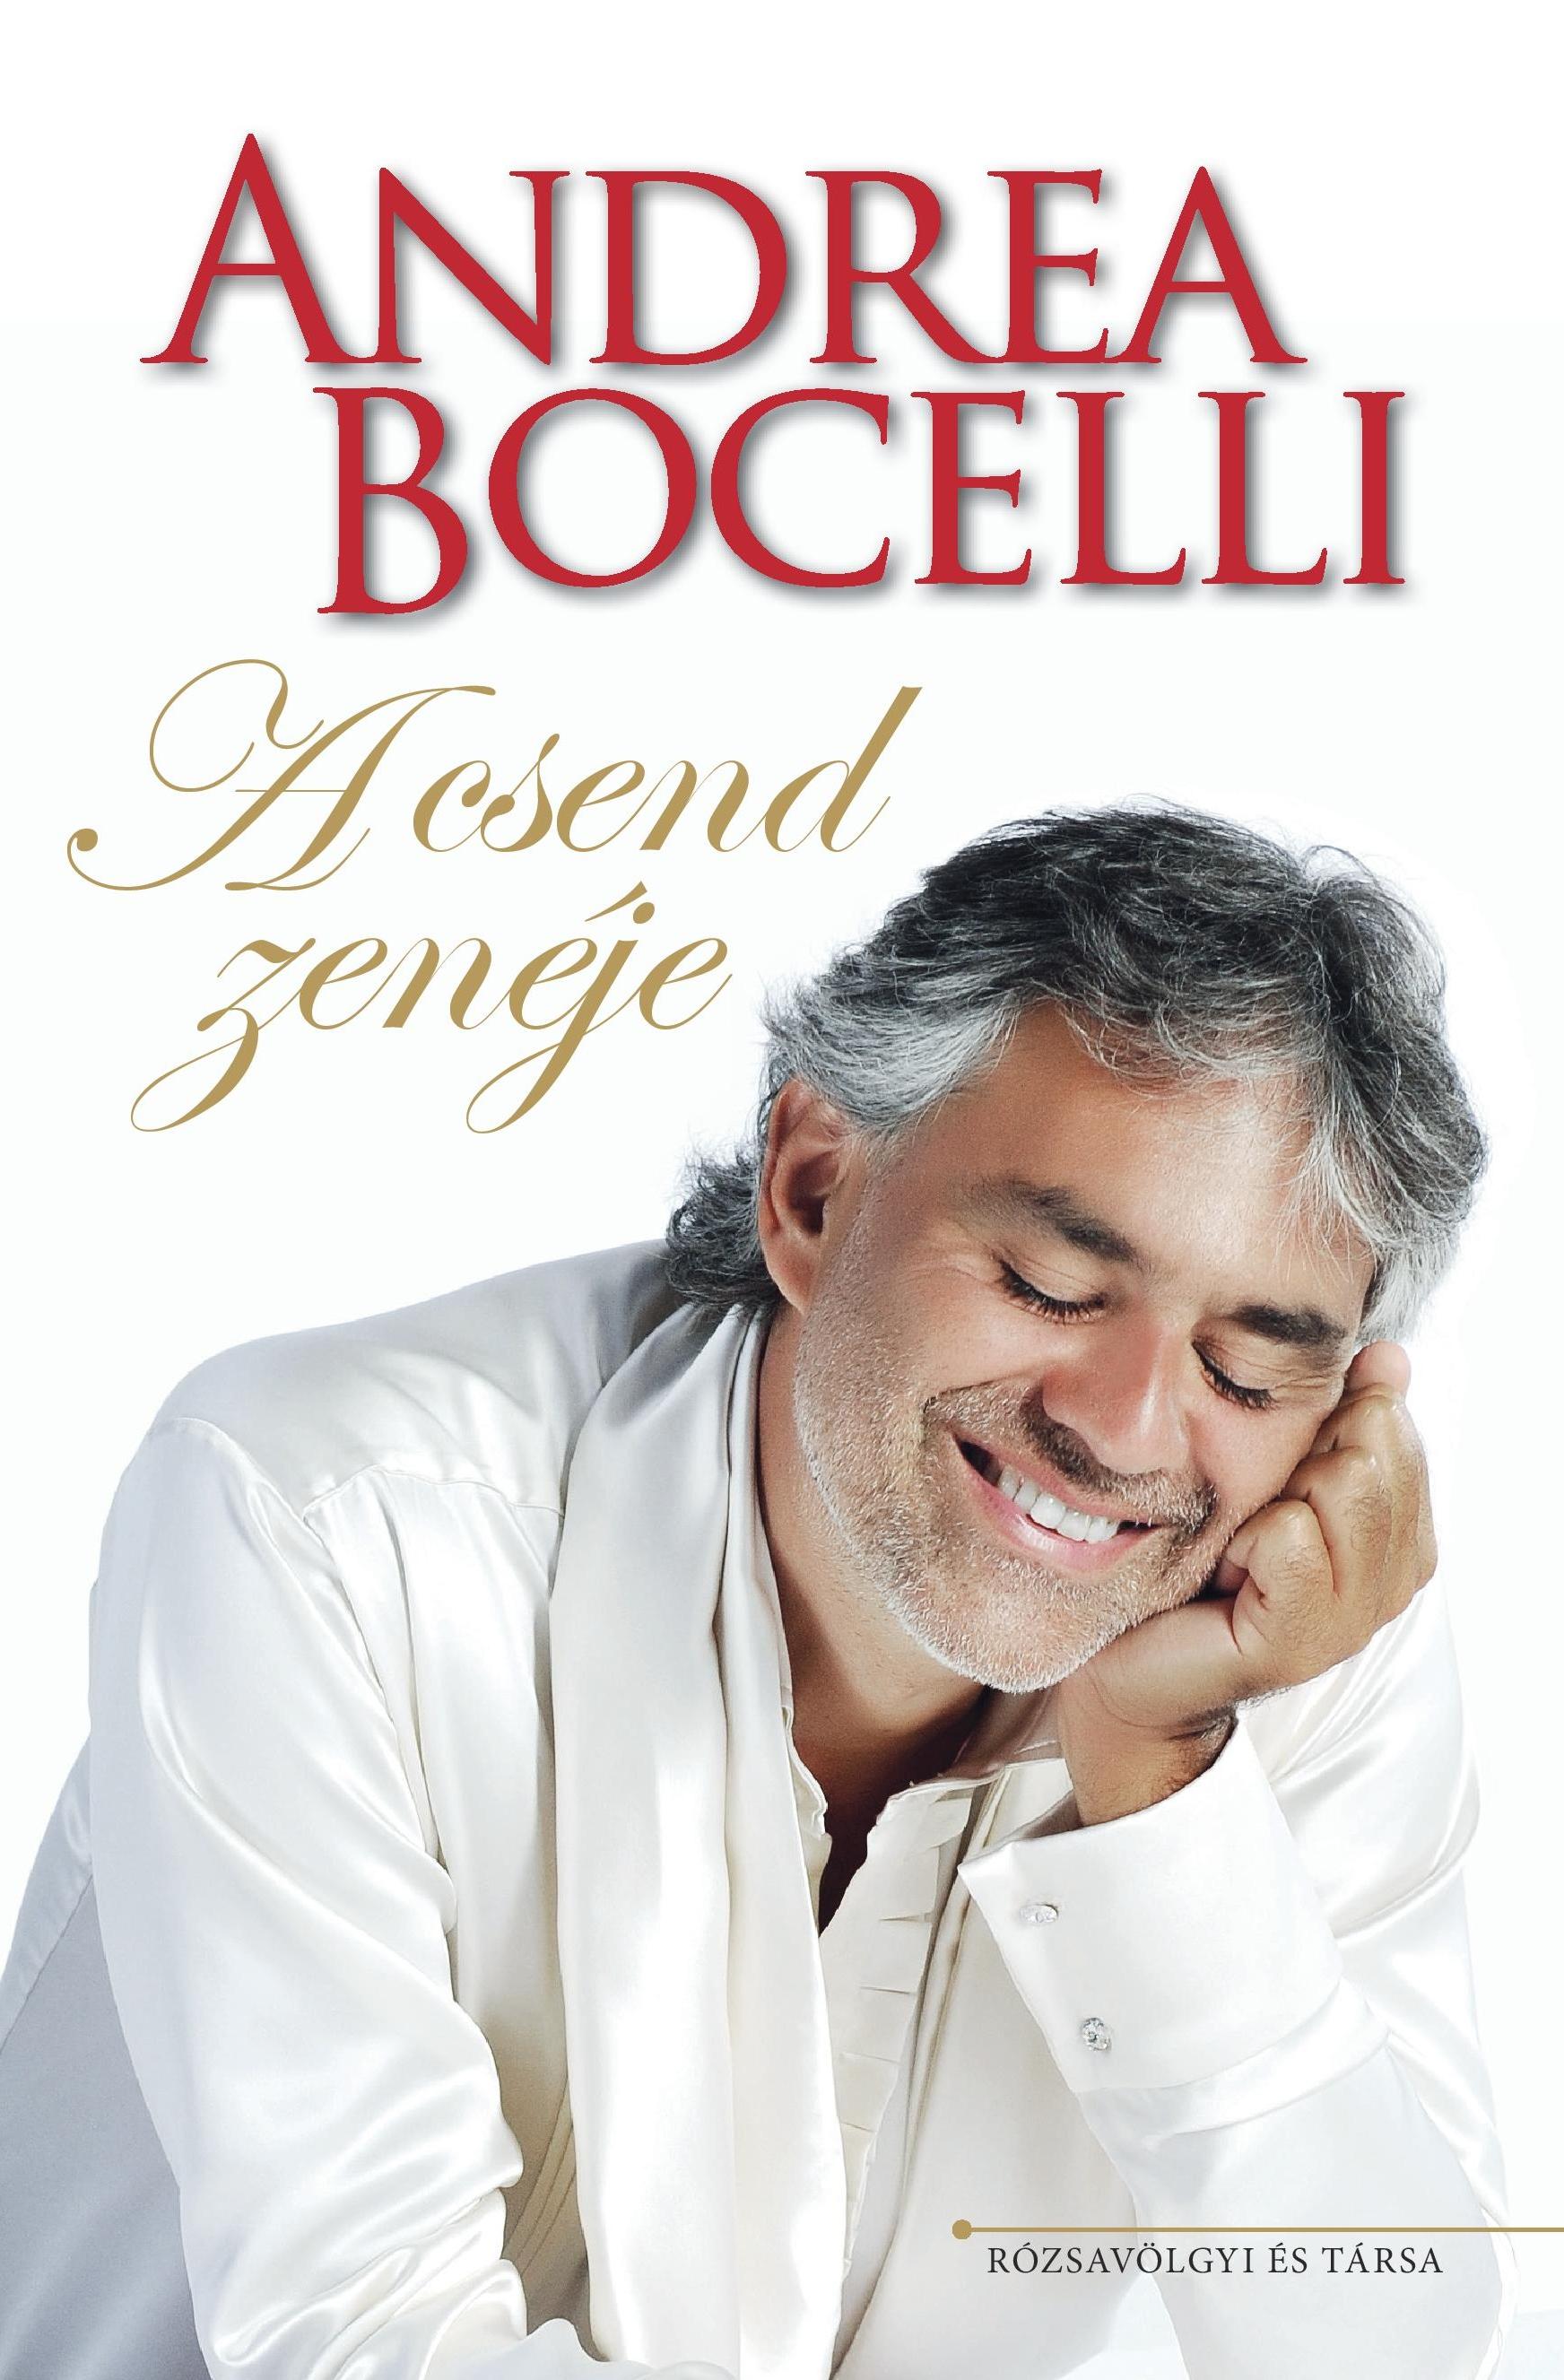 Andrea Bocelli - A csend zenéje